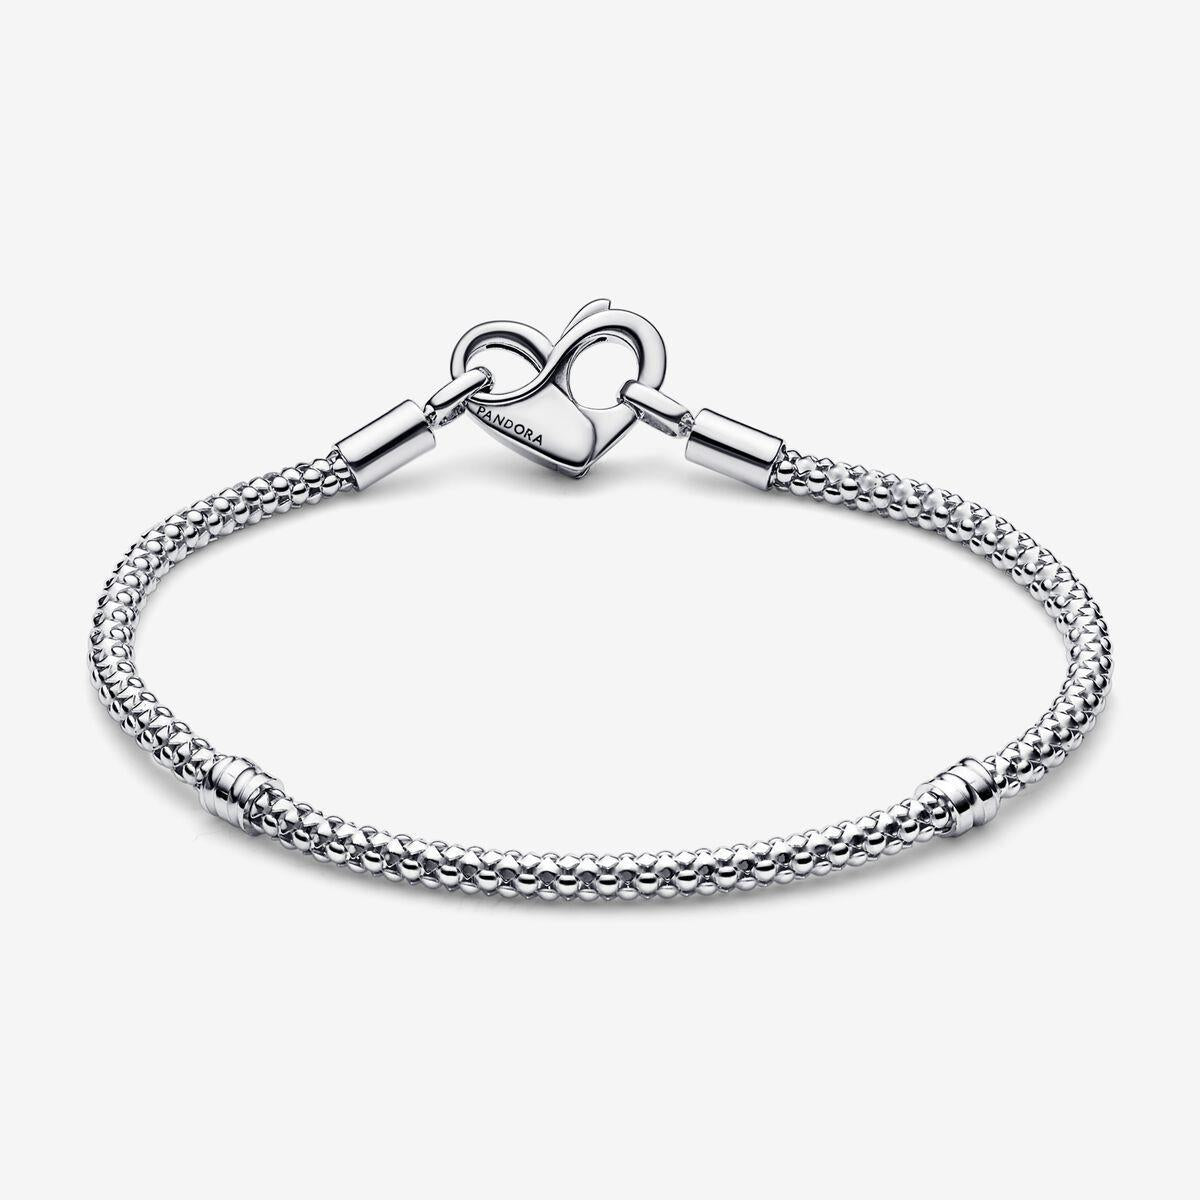 Pandora Moments Studded Chain Bracelet 20 cm